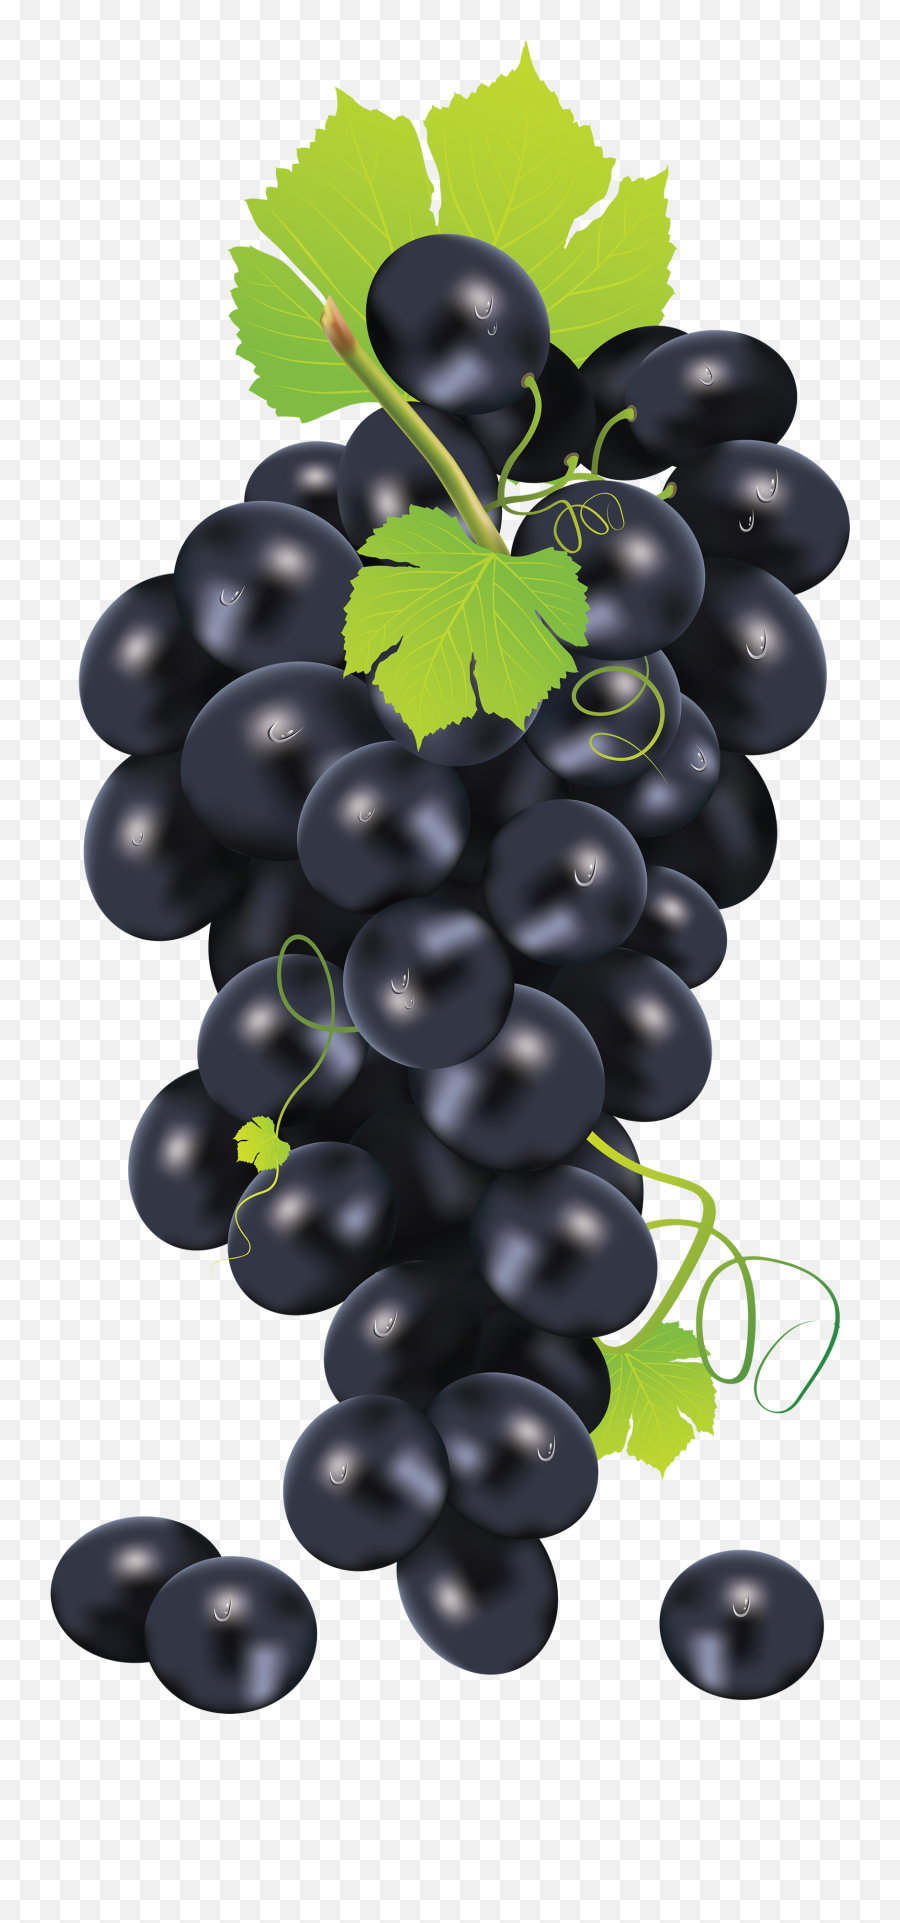 Download Black Grapes Png Image For Free - Black Grapes Vector Png,Grapes Png